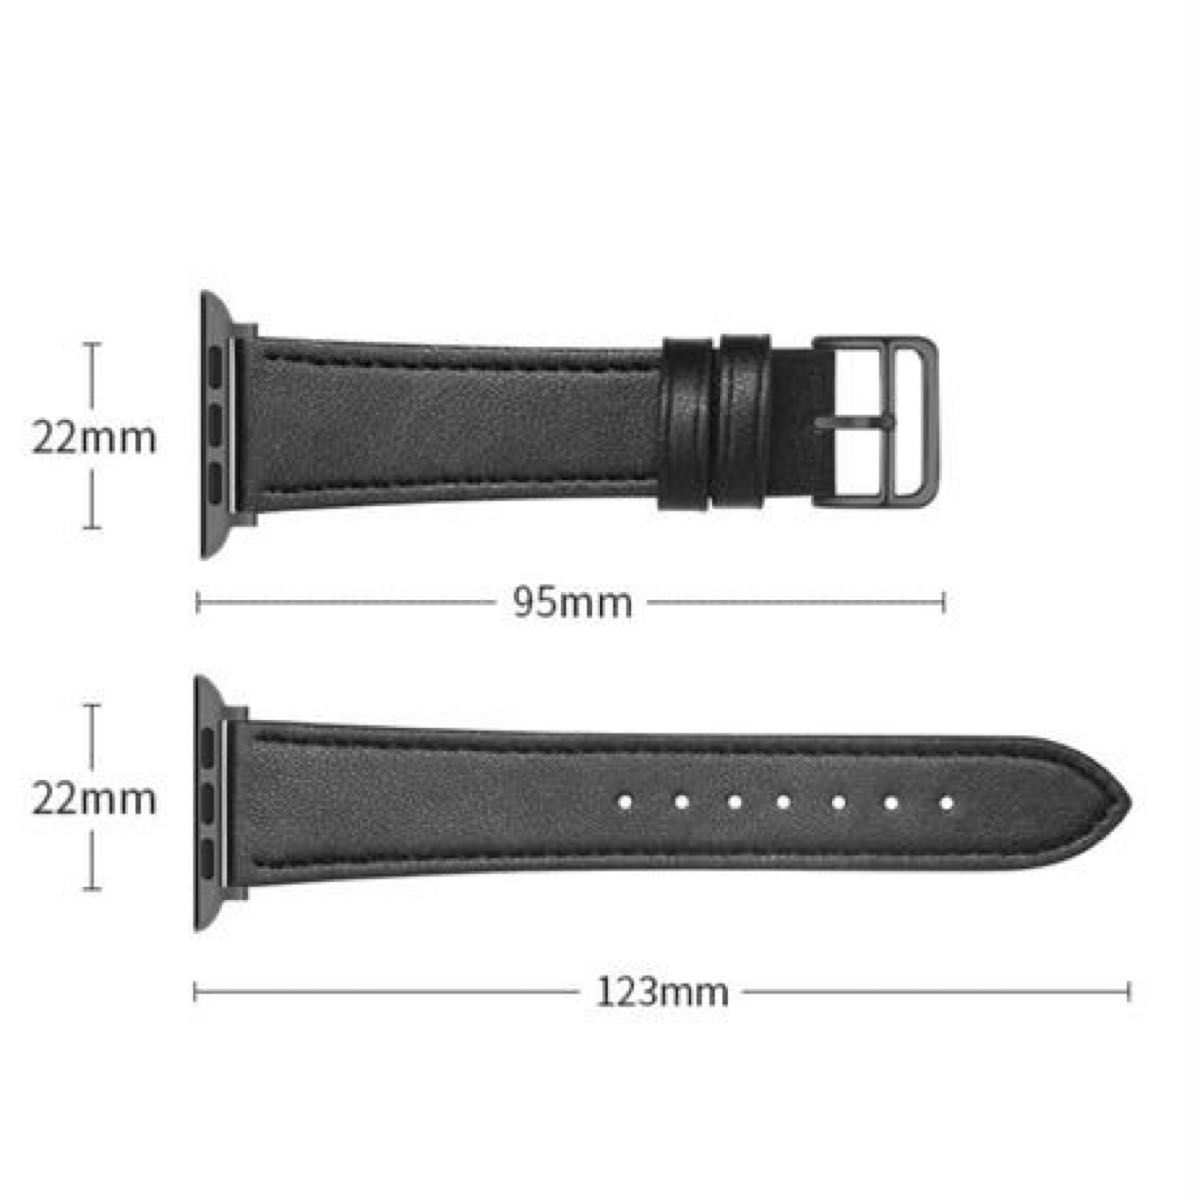 Apple Watch バンド 合皮 38/40/41mm ブラック